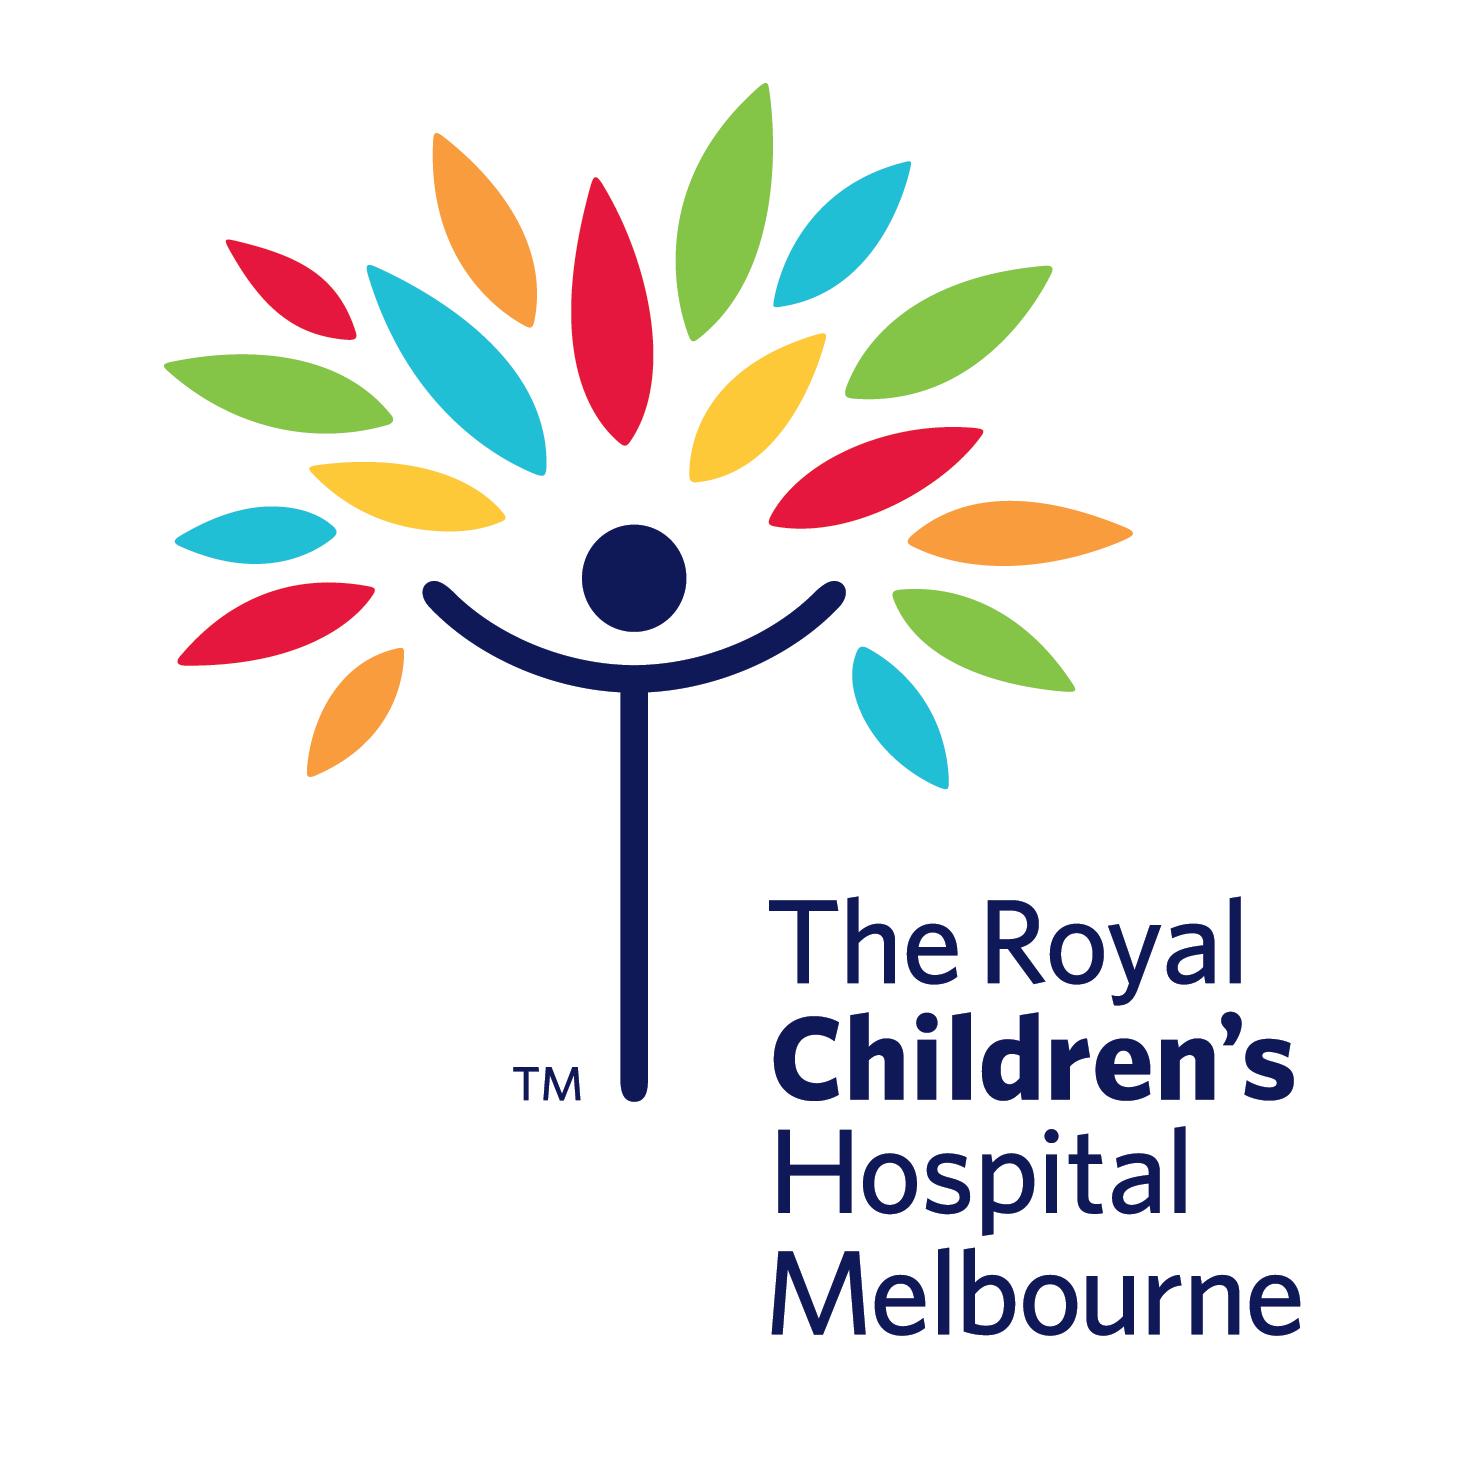 The Royal Children's Hospital Melbourne logo